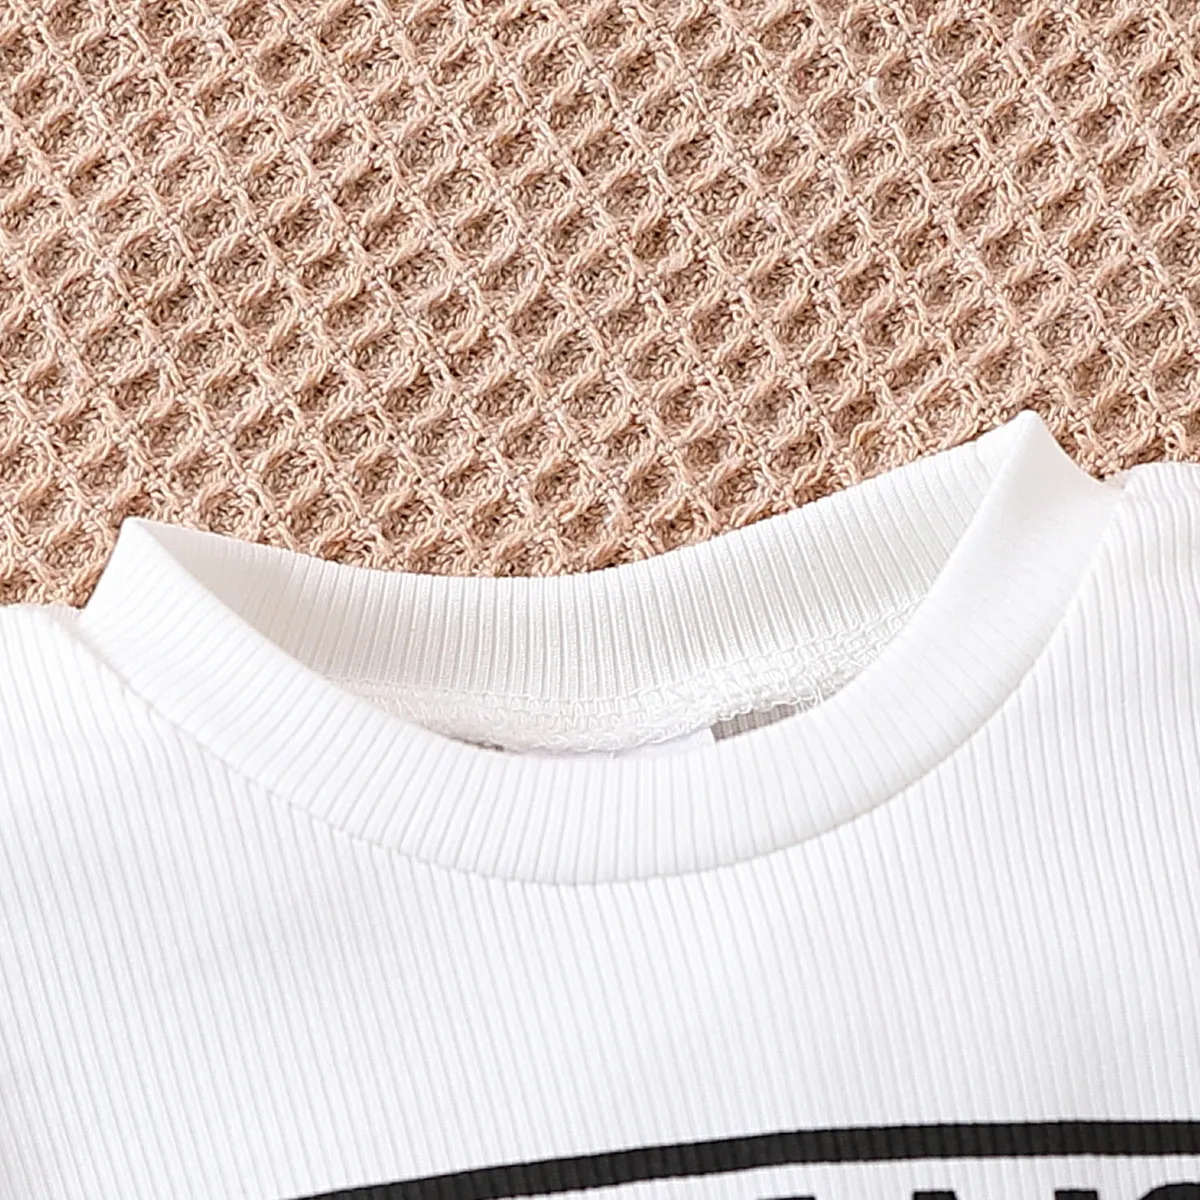 Baby Boy Letter Print Coffee Ribbed Long-sleeve Sweatshirt White big image 1